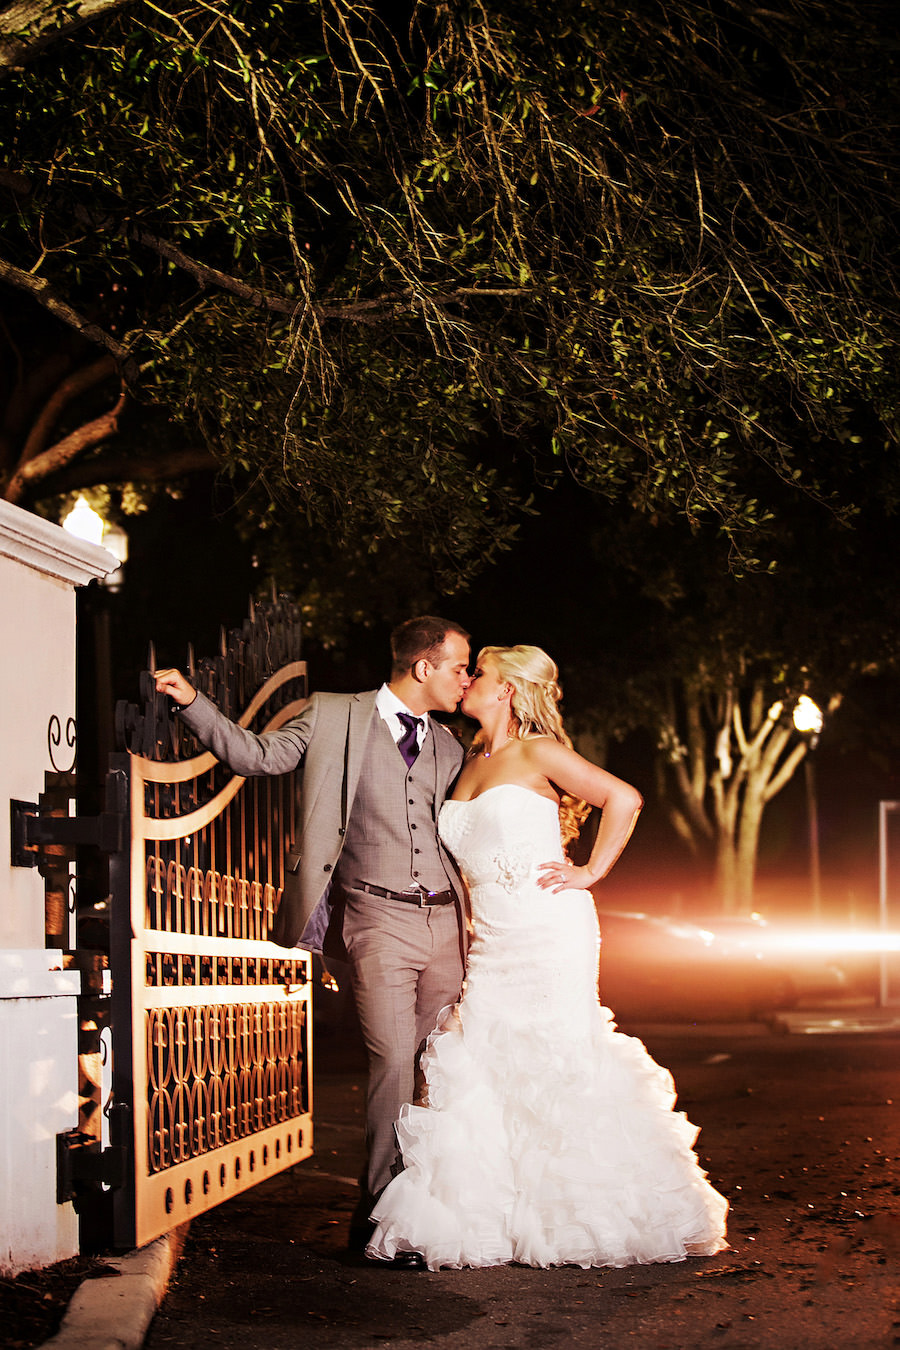 Outdoor, Bride and Groom Nighttime Wedding Portrait | St. Petersburg Wedding Photographer Limelight Photography